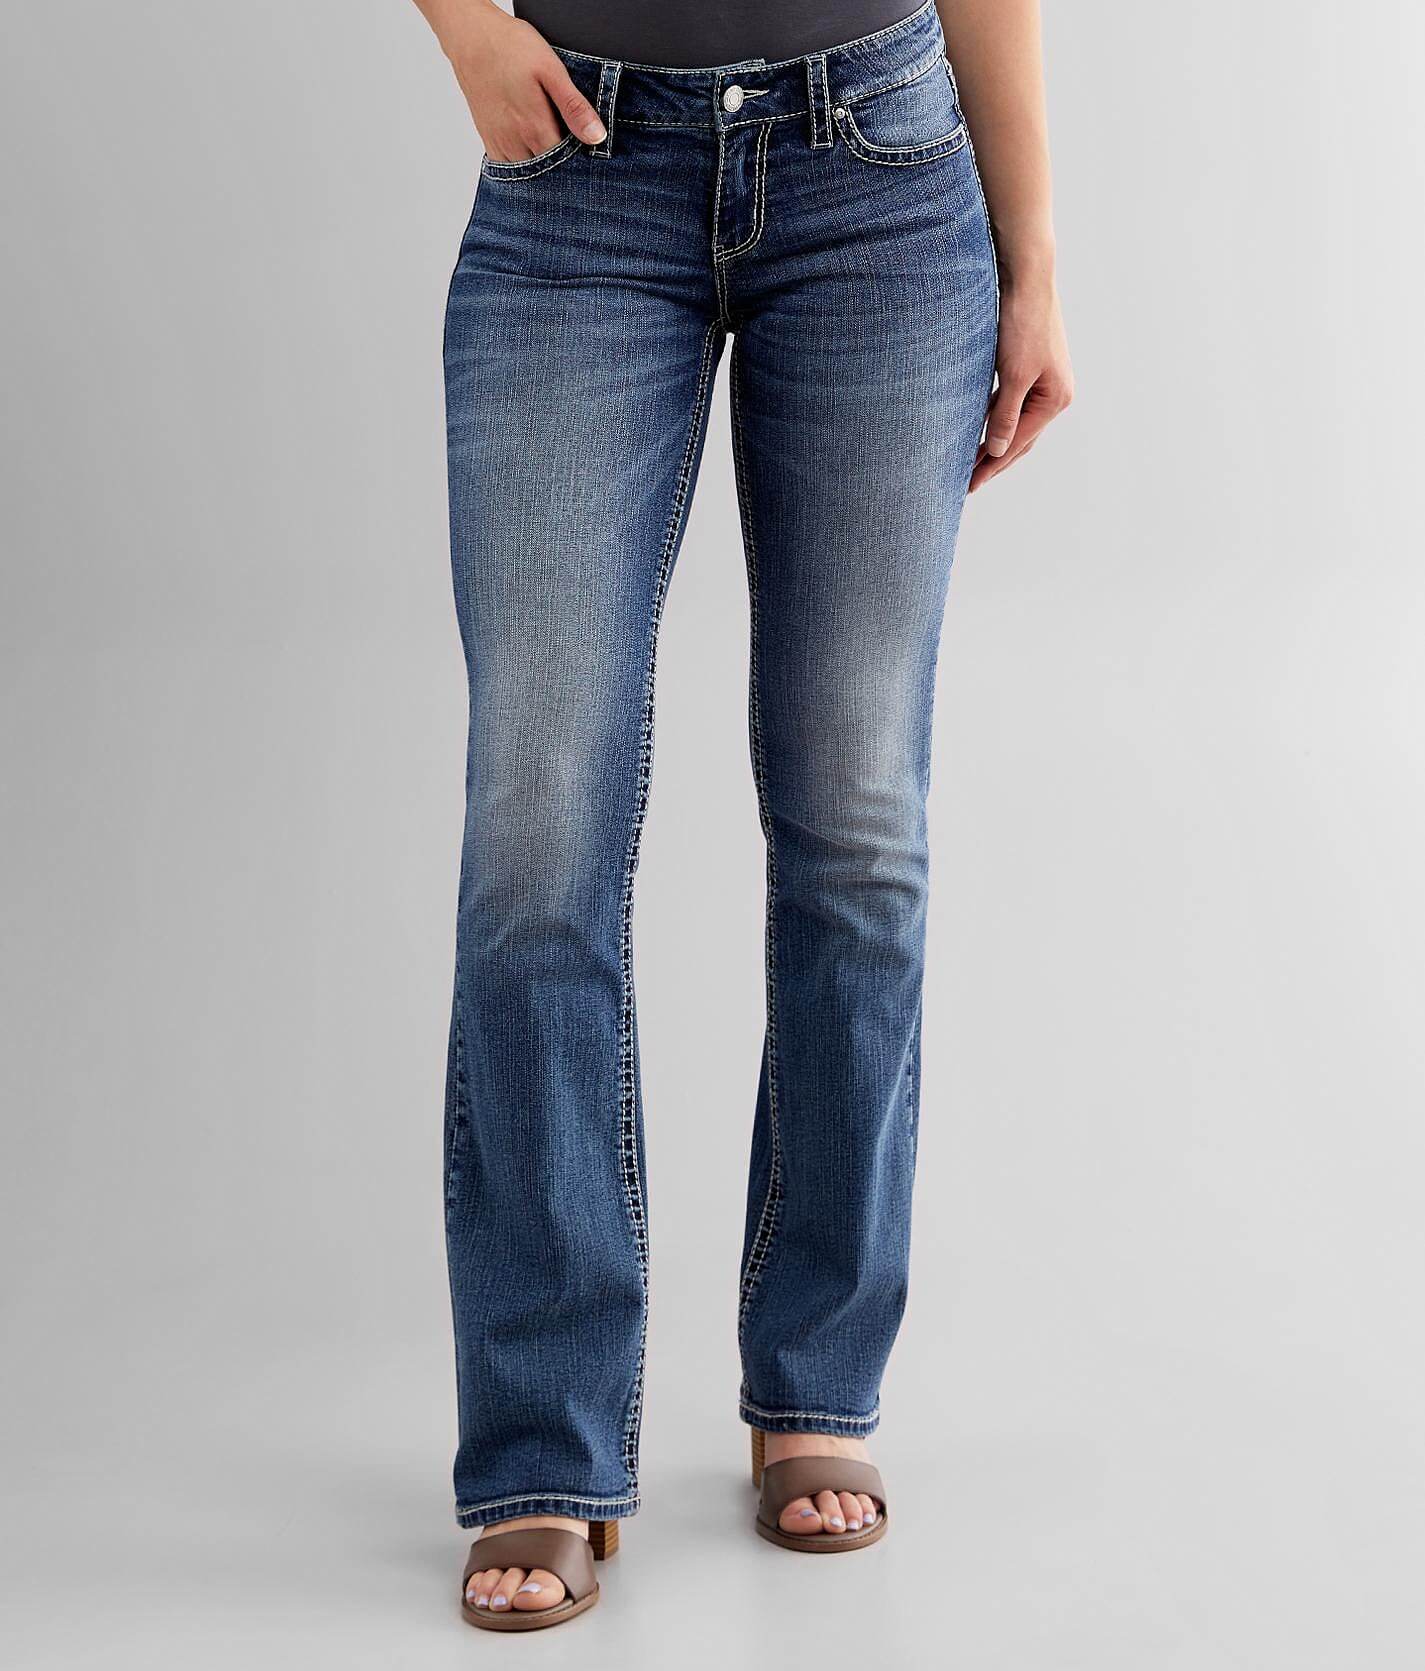 daytrip jeans wholesale